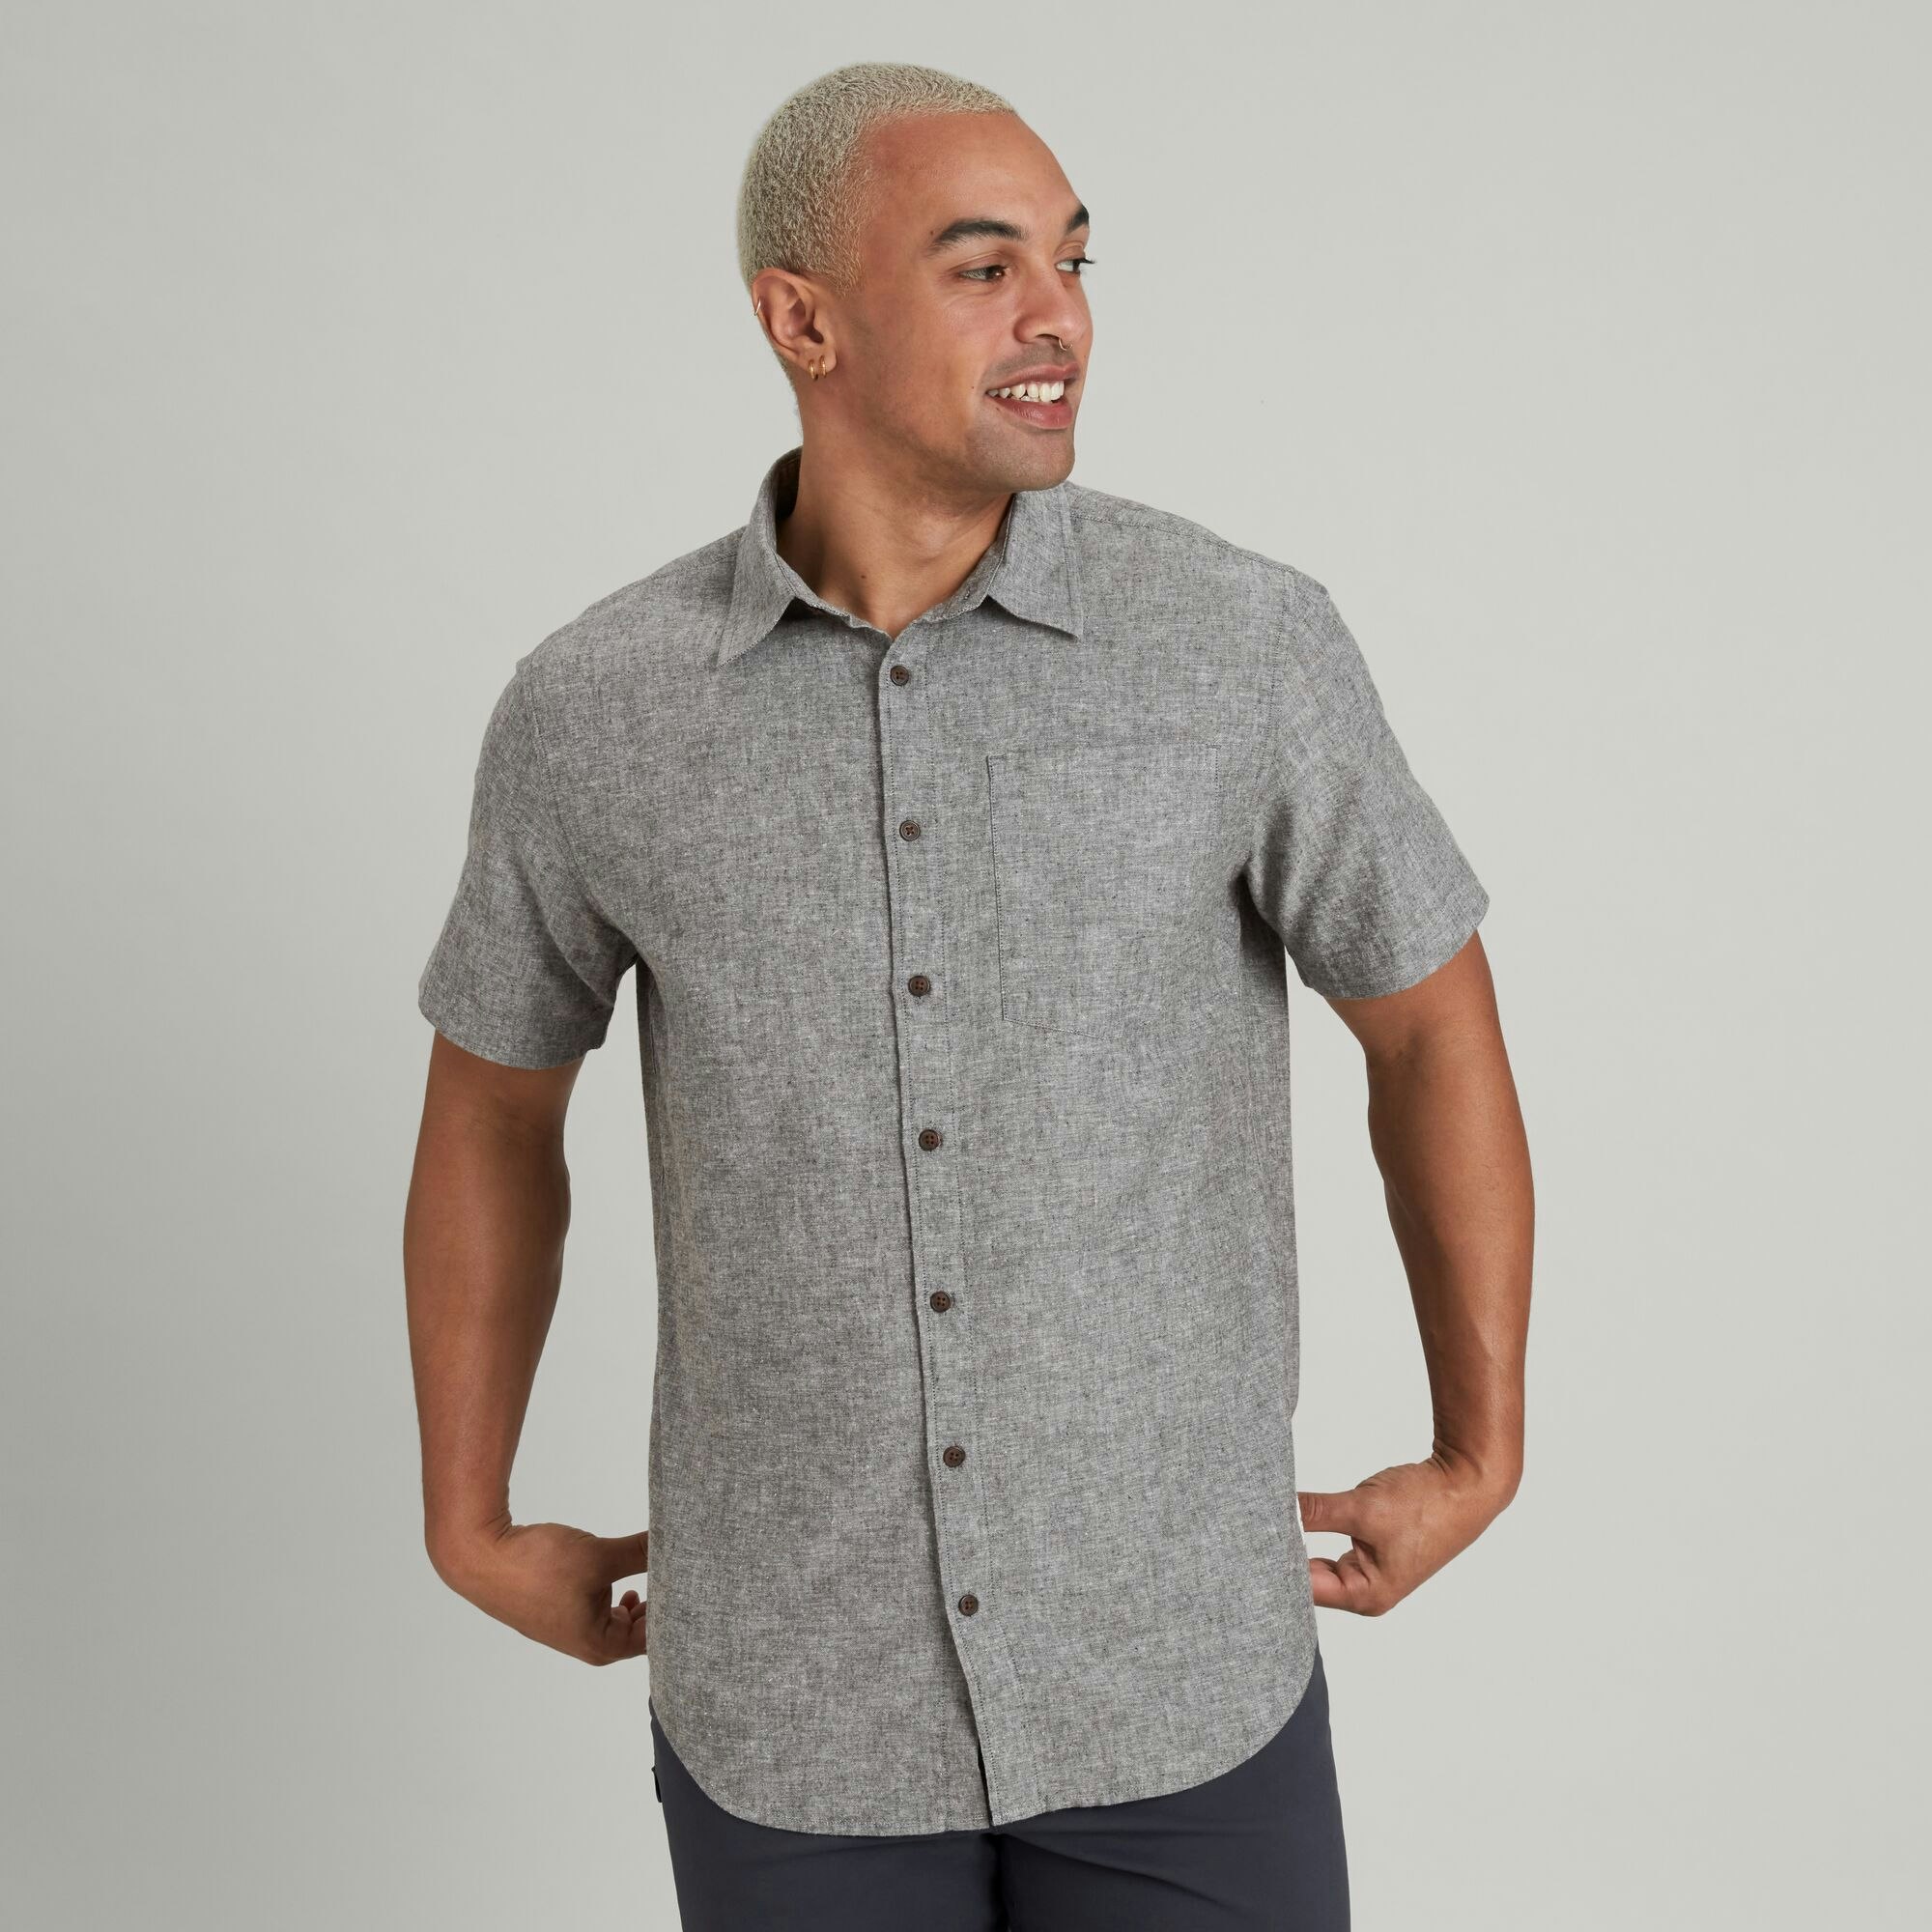 Short Sleeve Shirts For Men, Dress & Casual